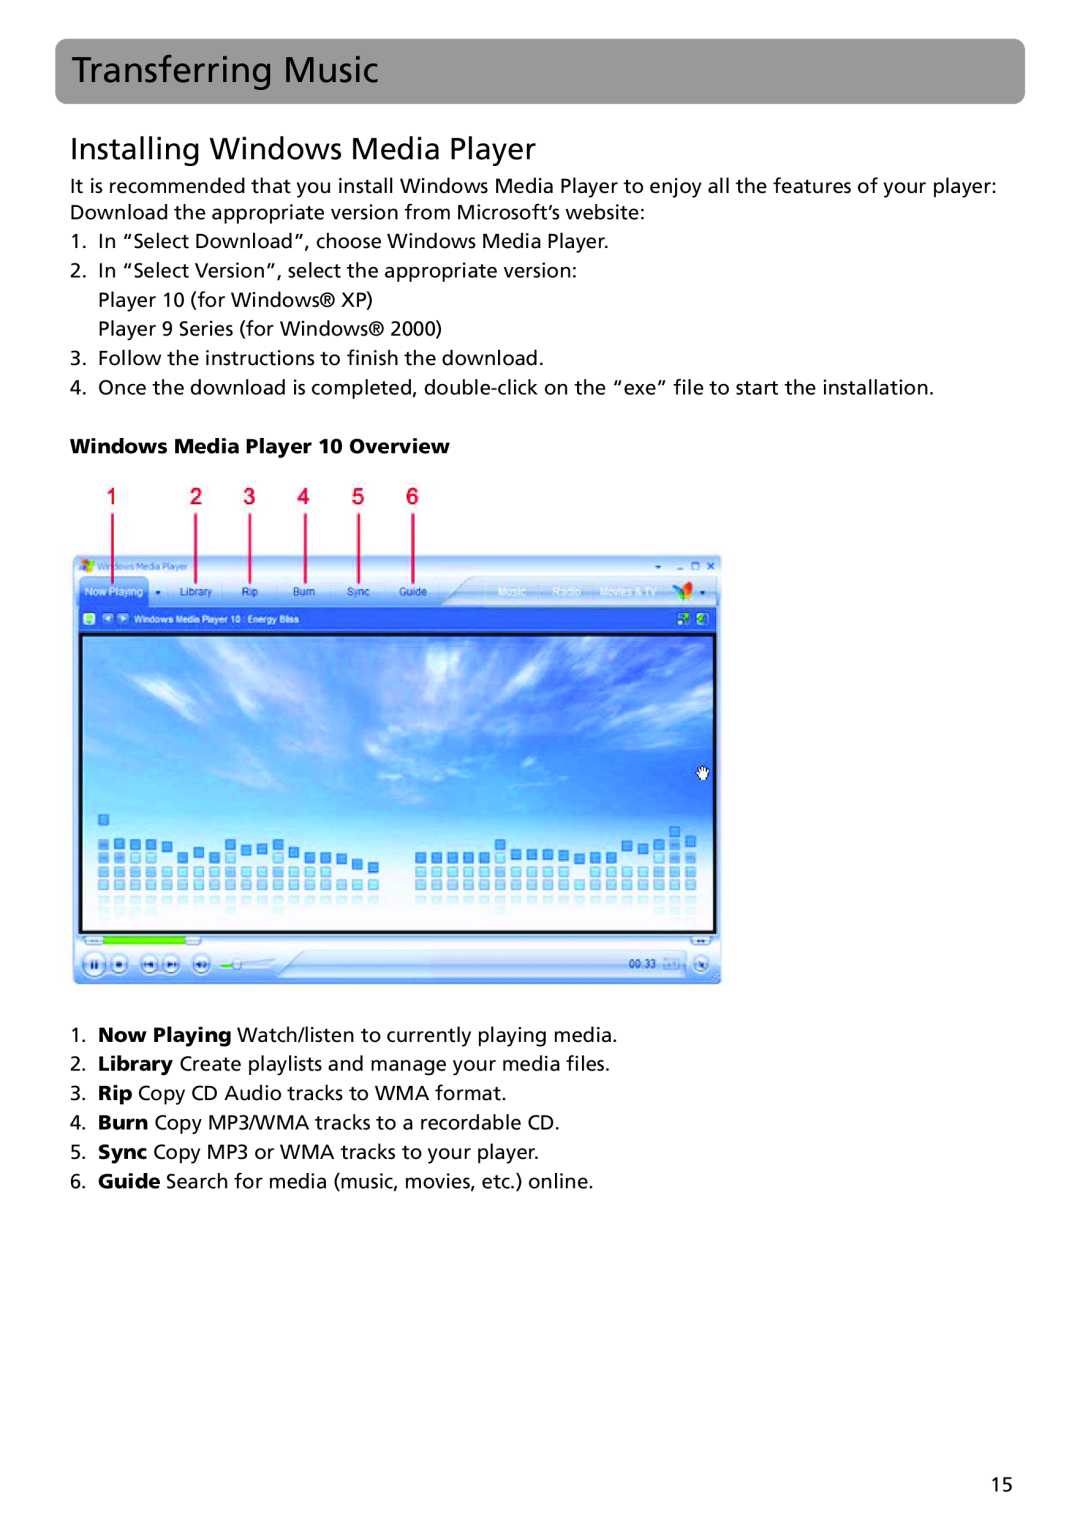 RCA TH1401 user manual Transferring Music, Installing Windows Media Player, Windows Media Player 10 Overview 